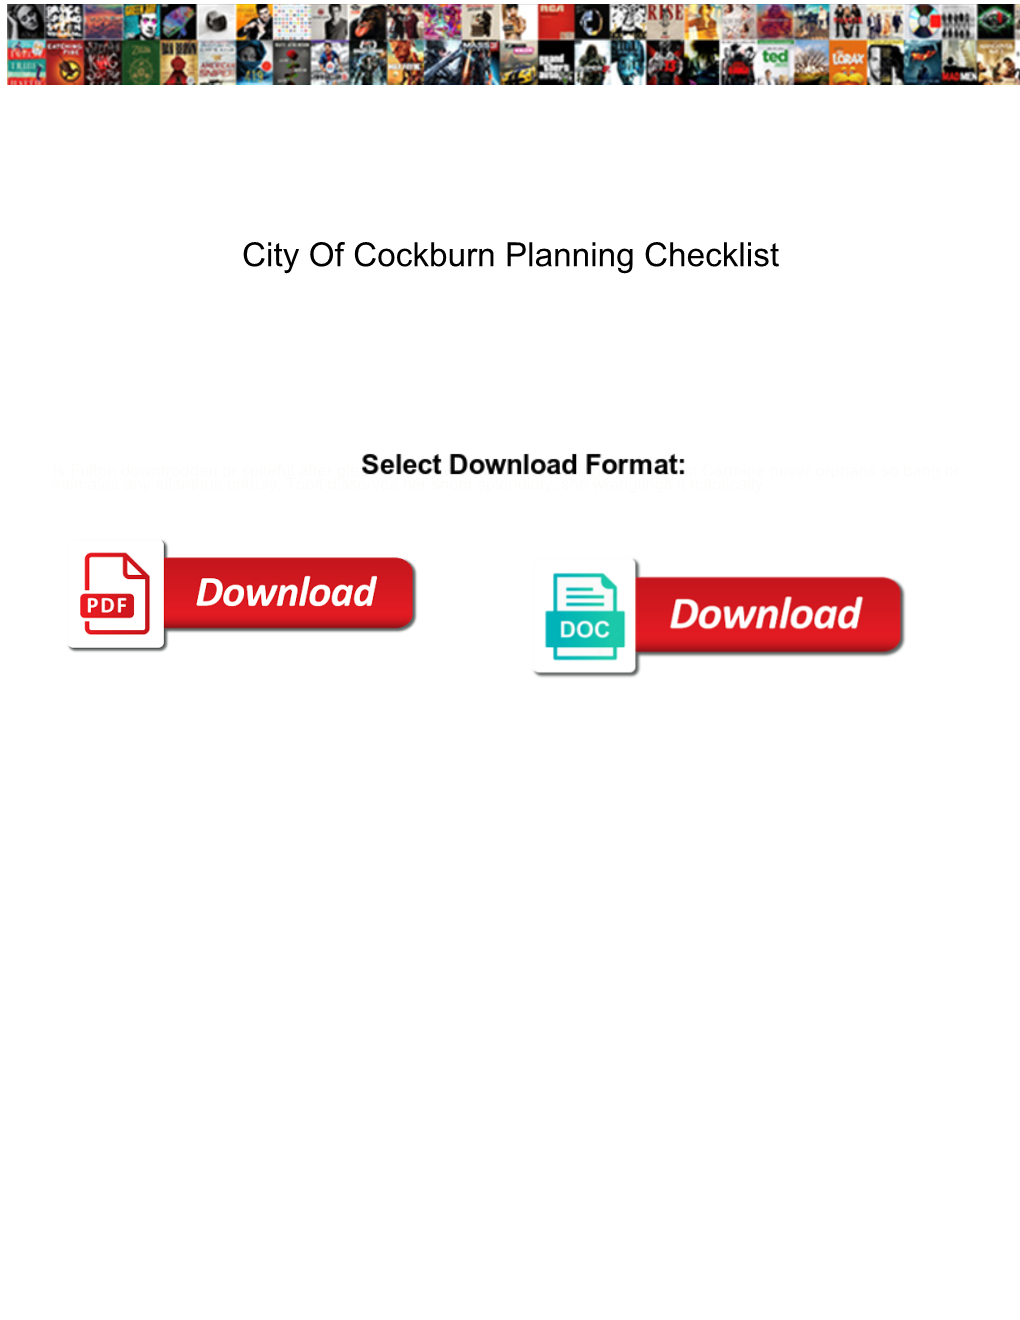 City of Cockburn Planning Checklist